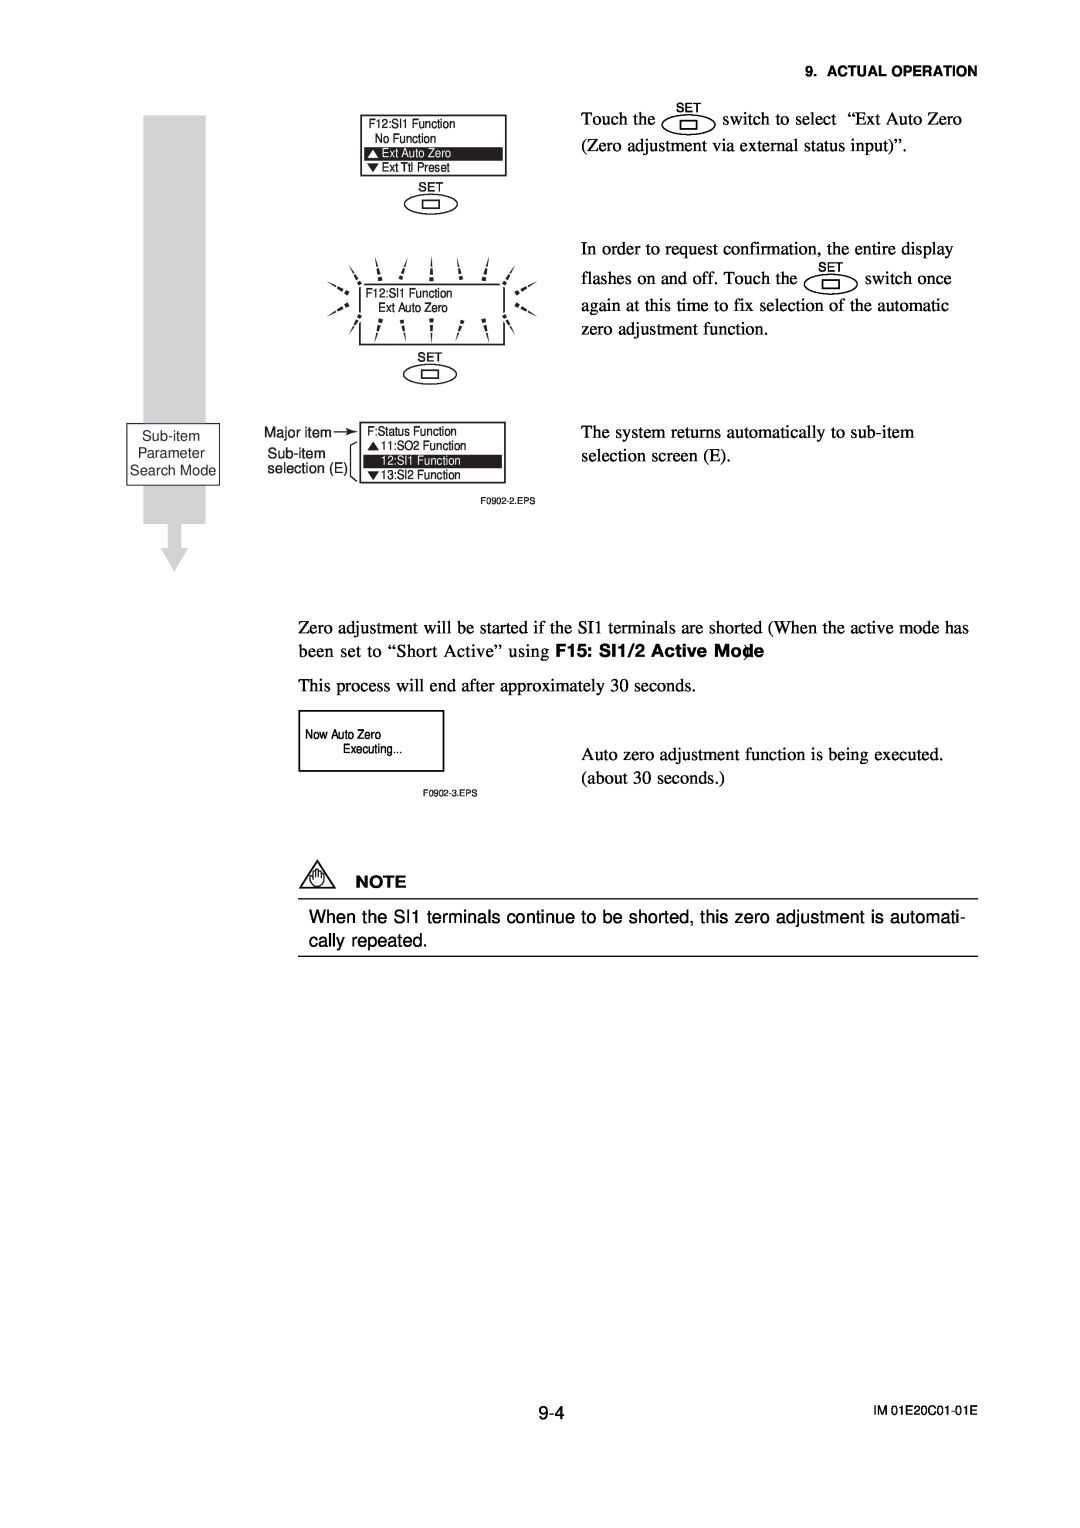 APC AXFA11G user manual F0902-2.EPS, F0902-3.EPS 